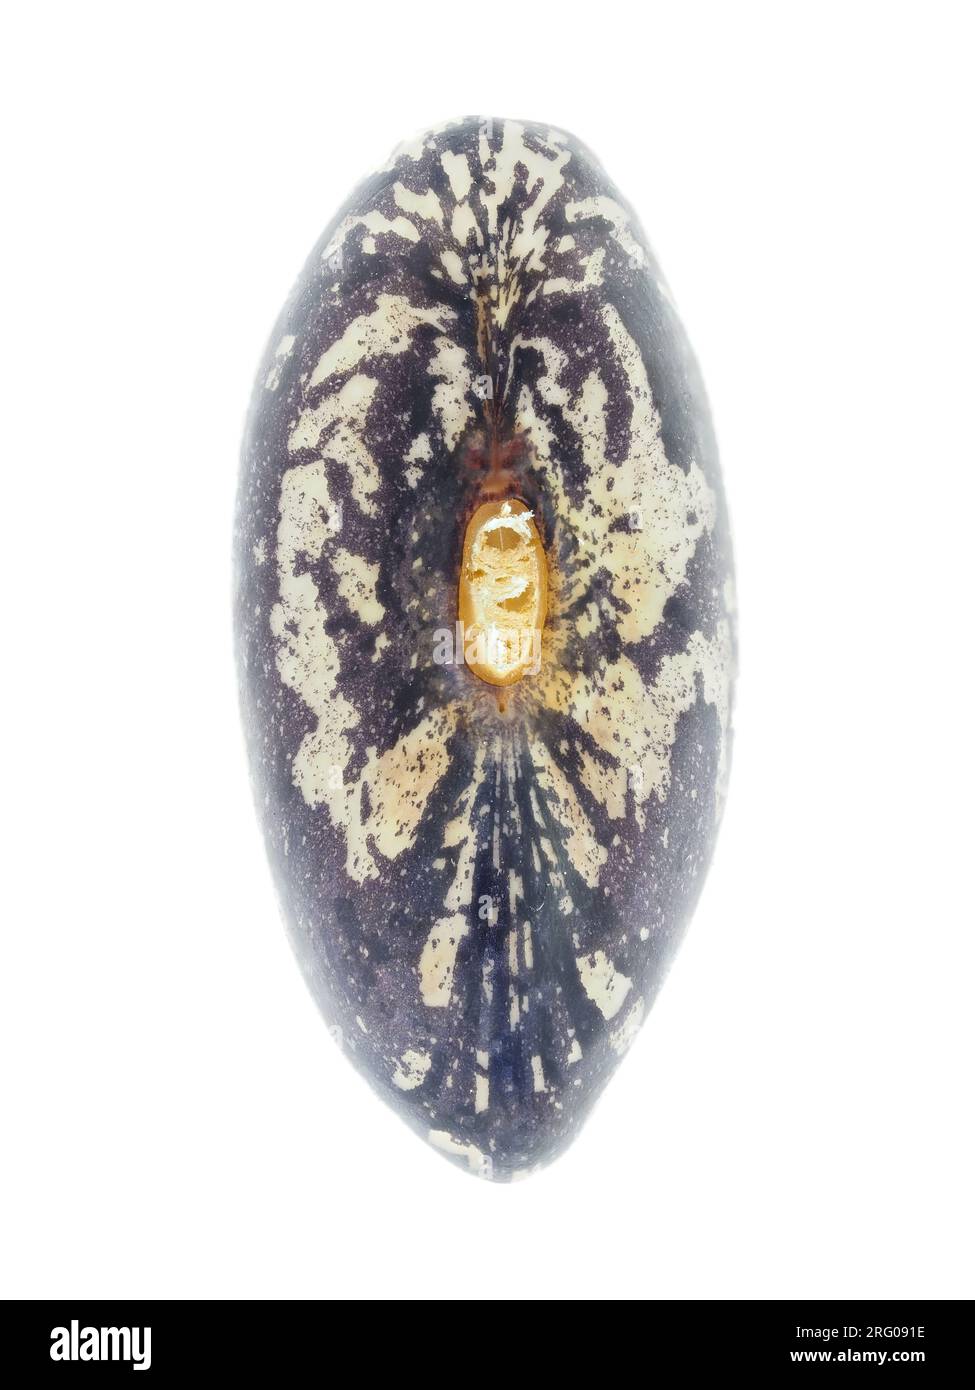 Single garden bean (Phaseolus vulgaris - Tendergreen Improved variety) seed Stock Photo